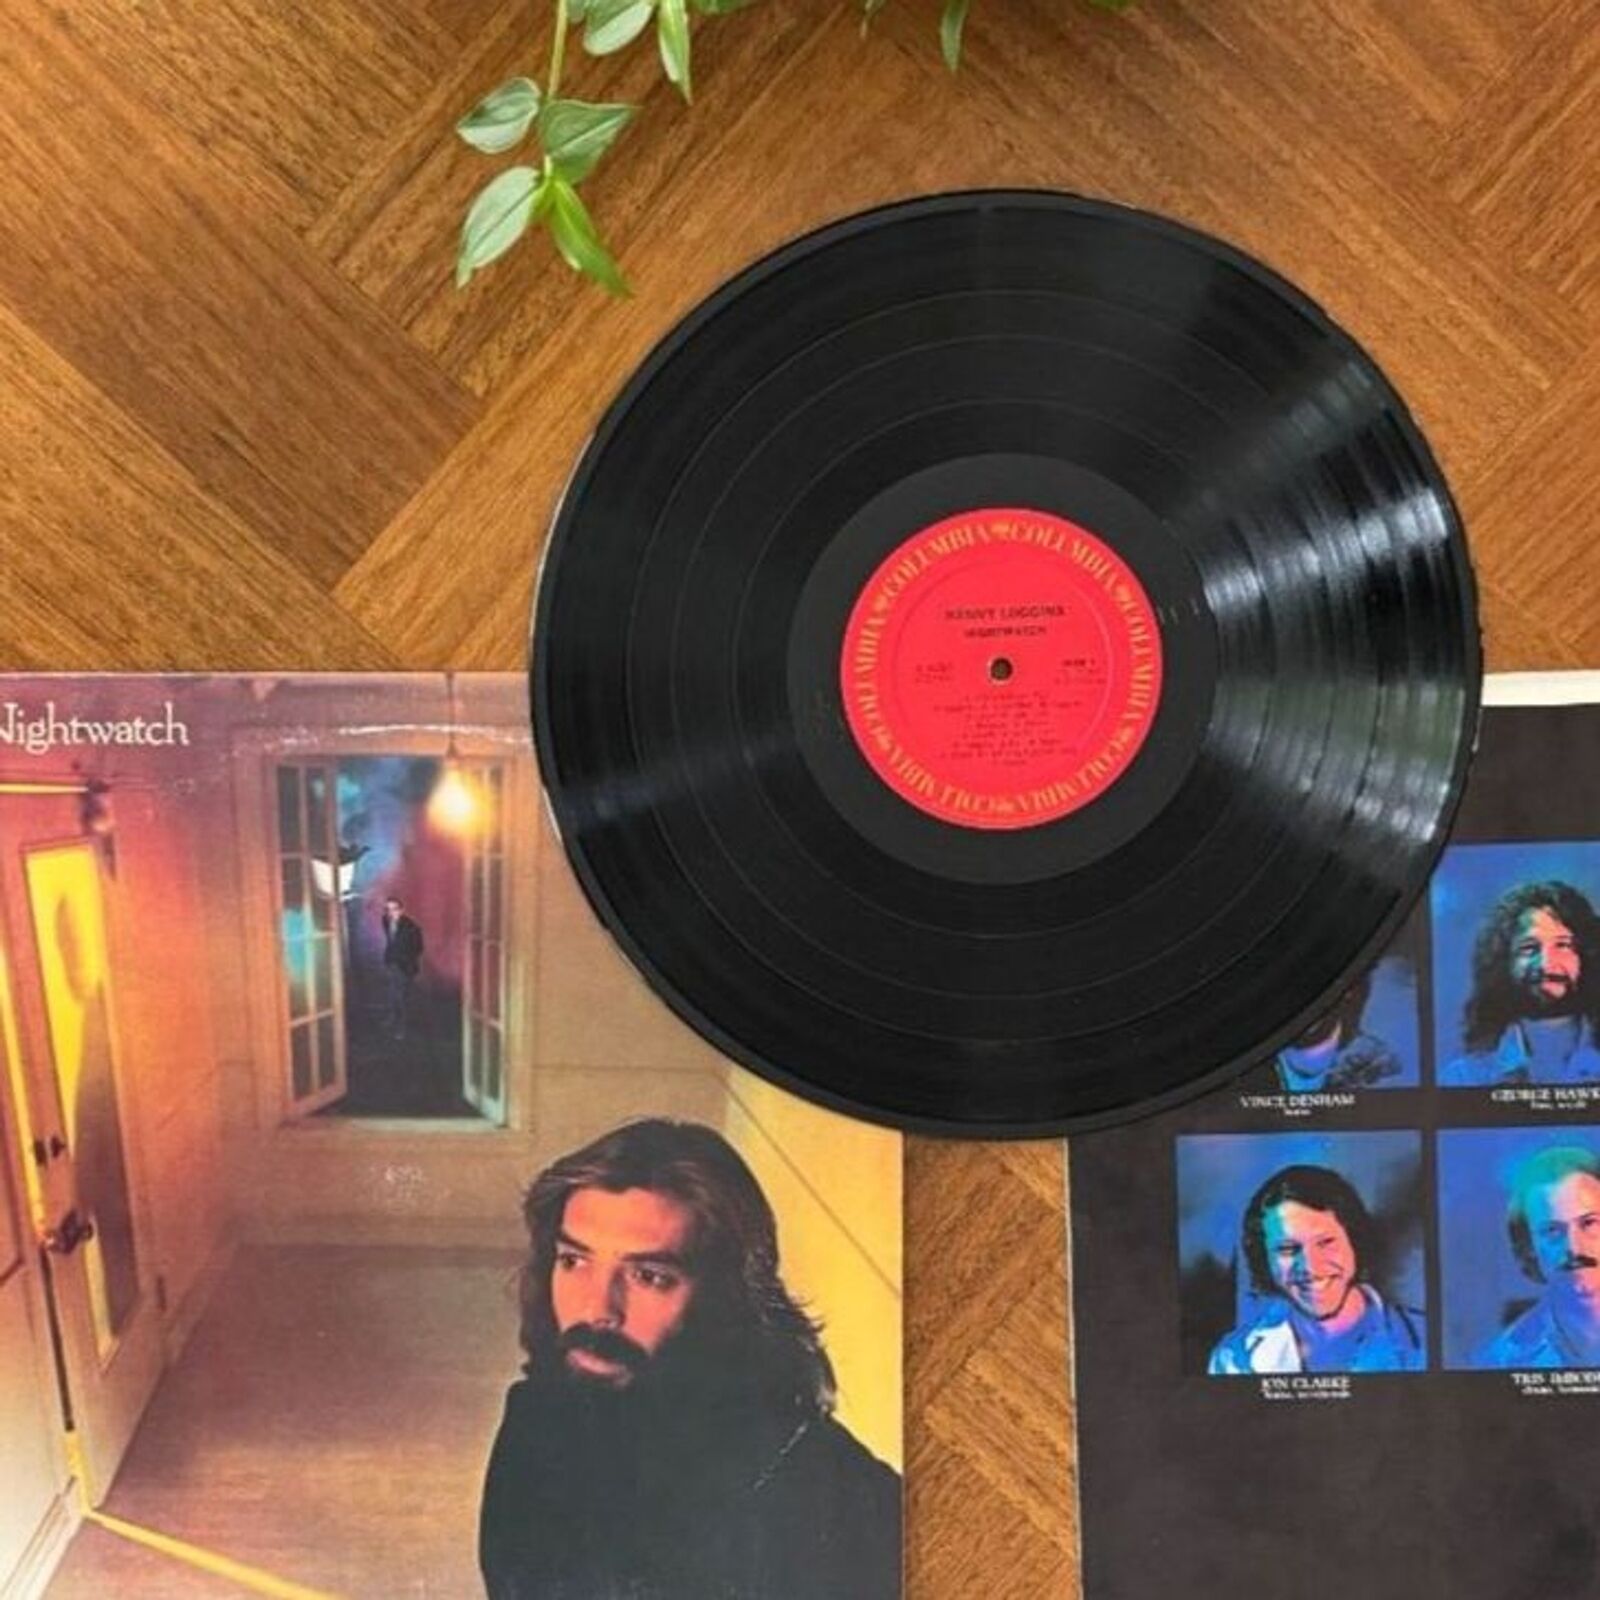 Kenny Loggins - Nightwatch - Vintage Vinyl LP - 1978 -Cleaned and Tested VG+